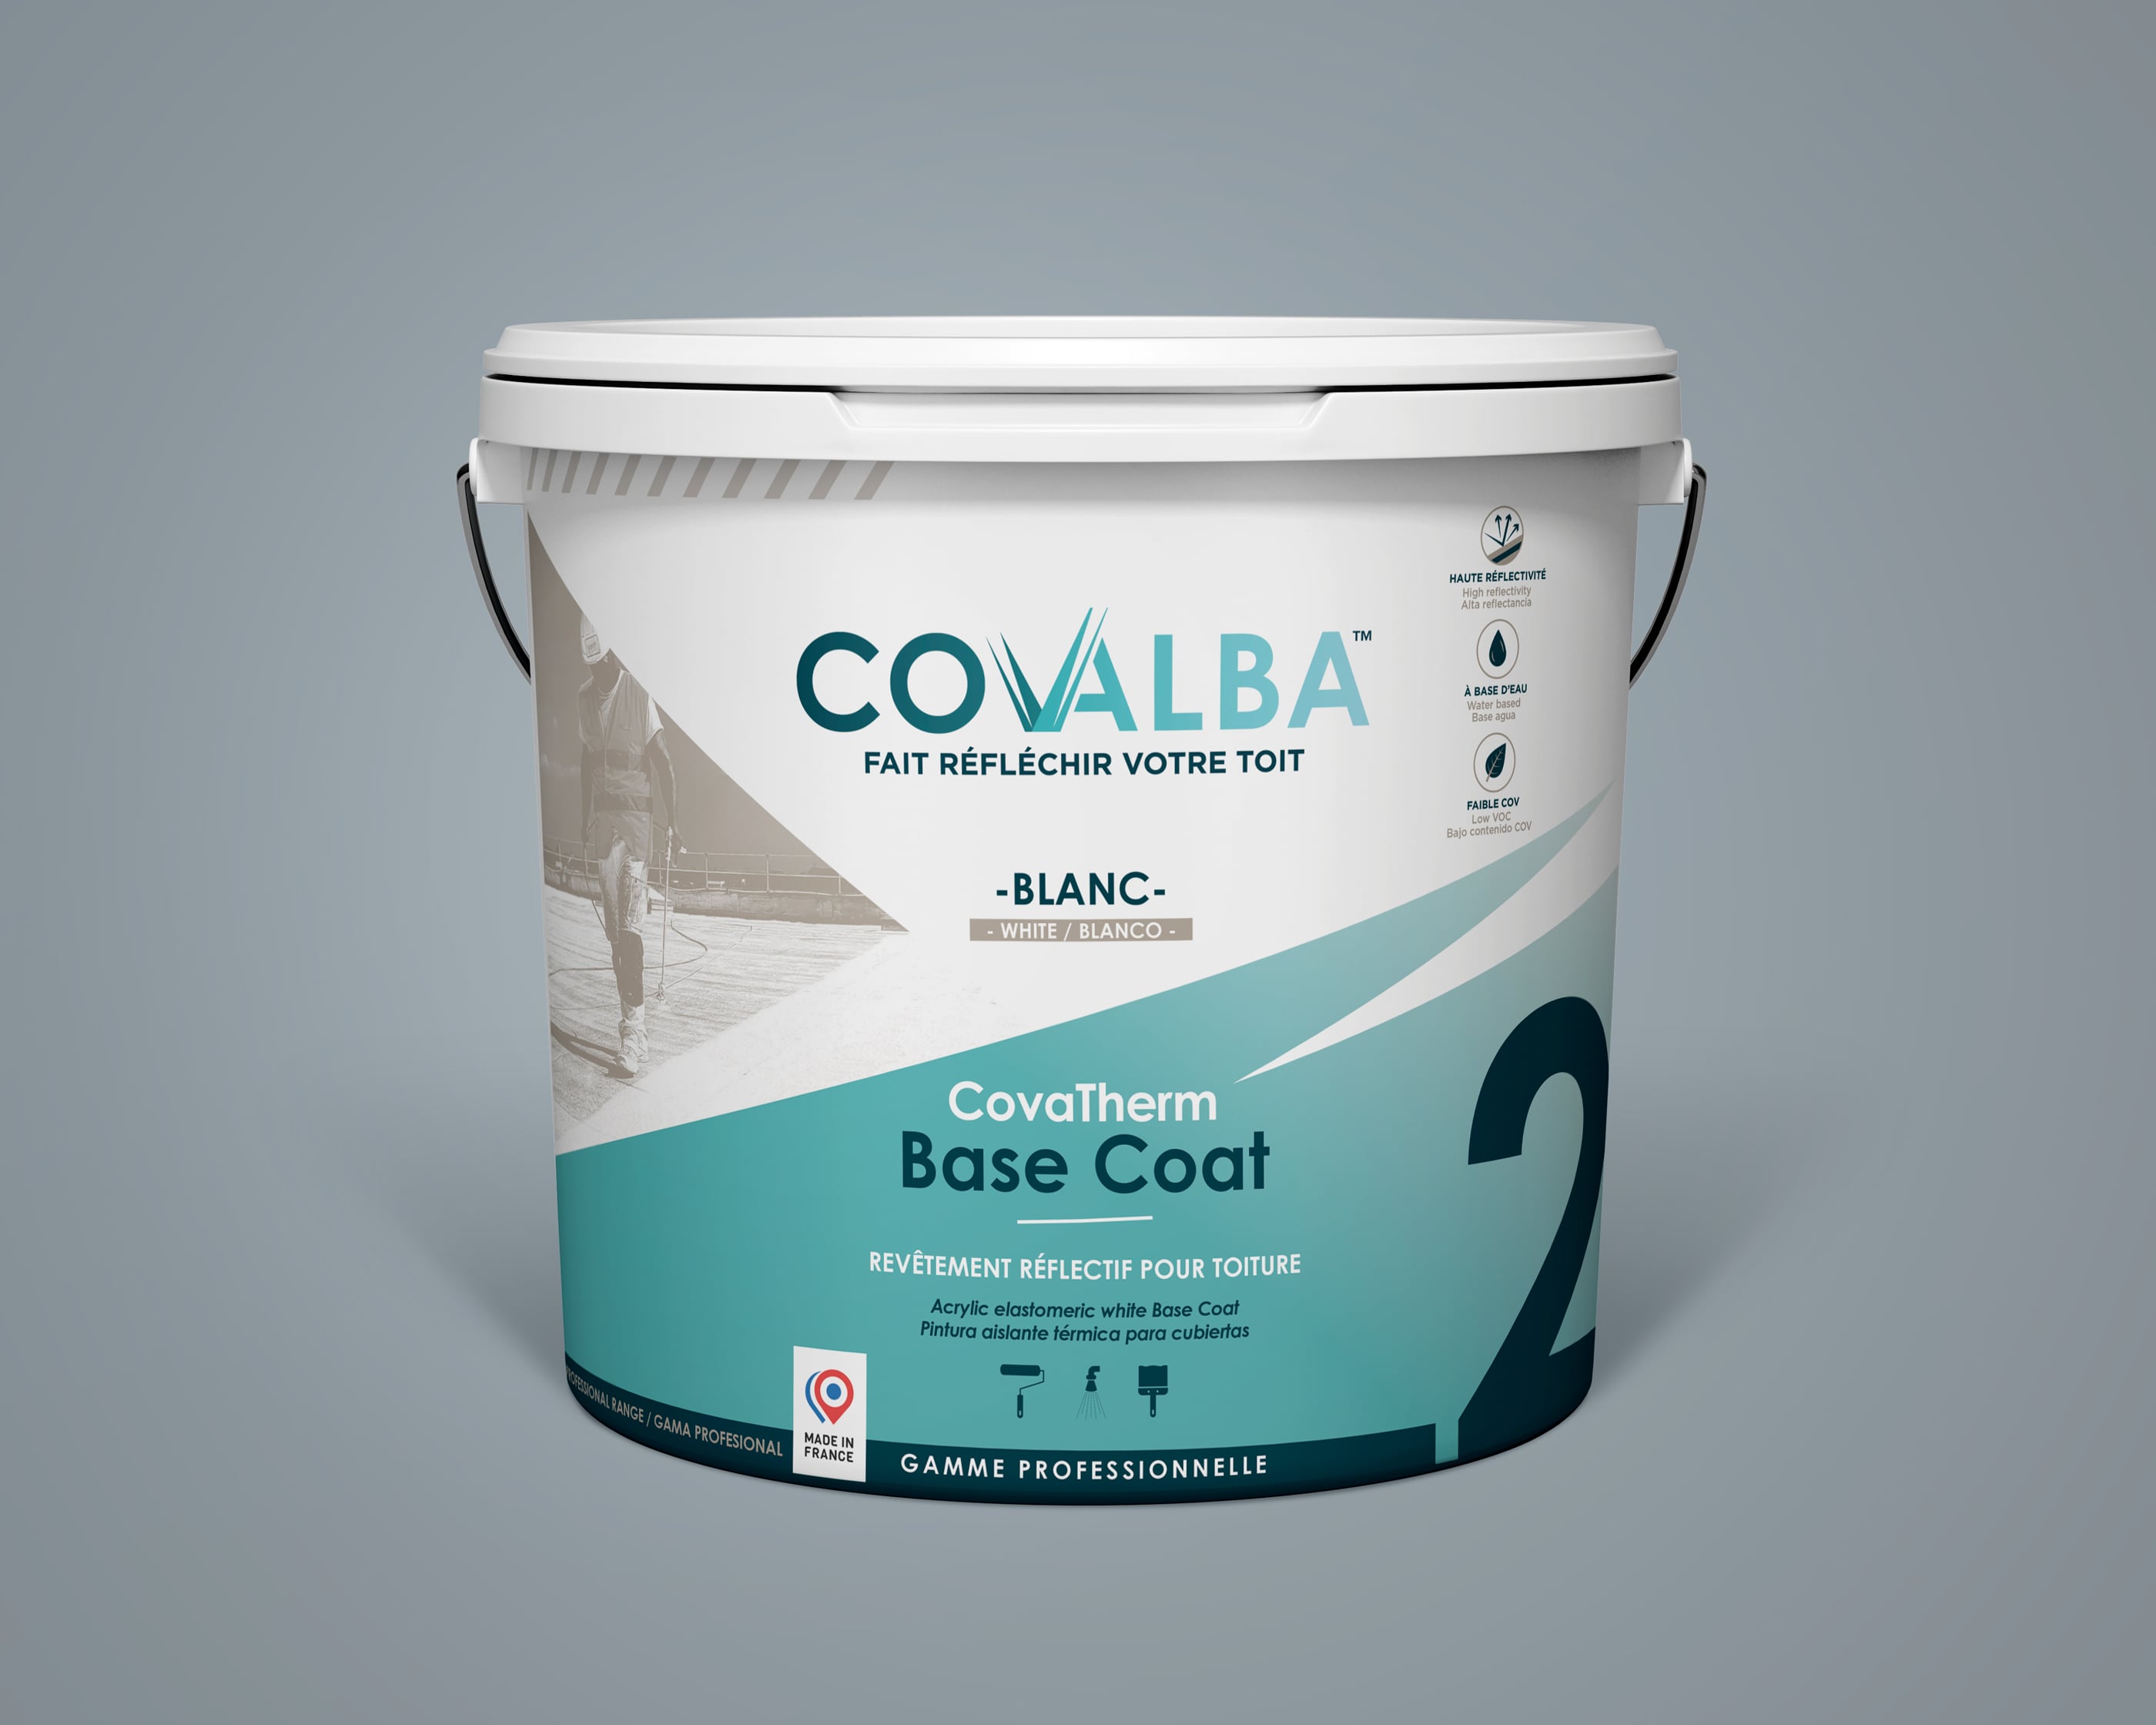 base coat cool roof covalba